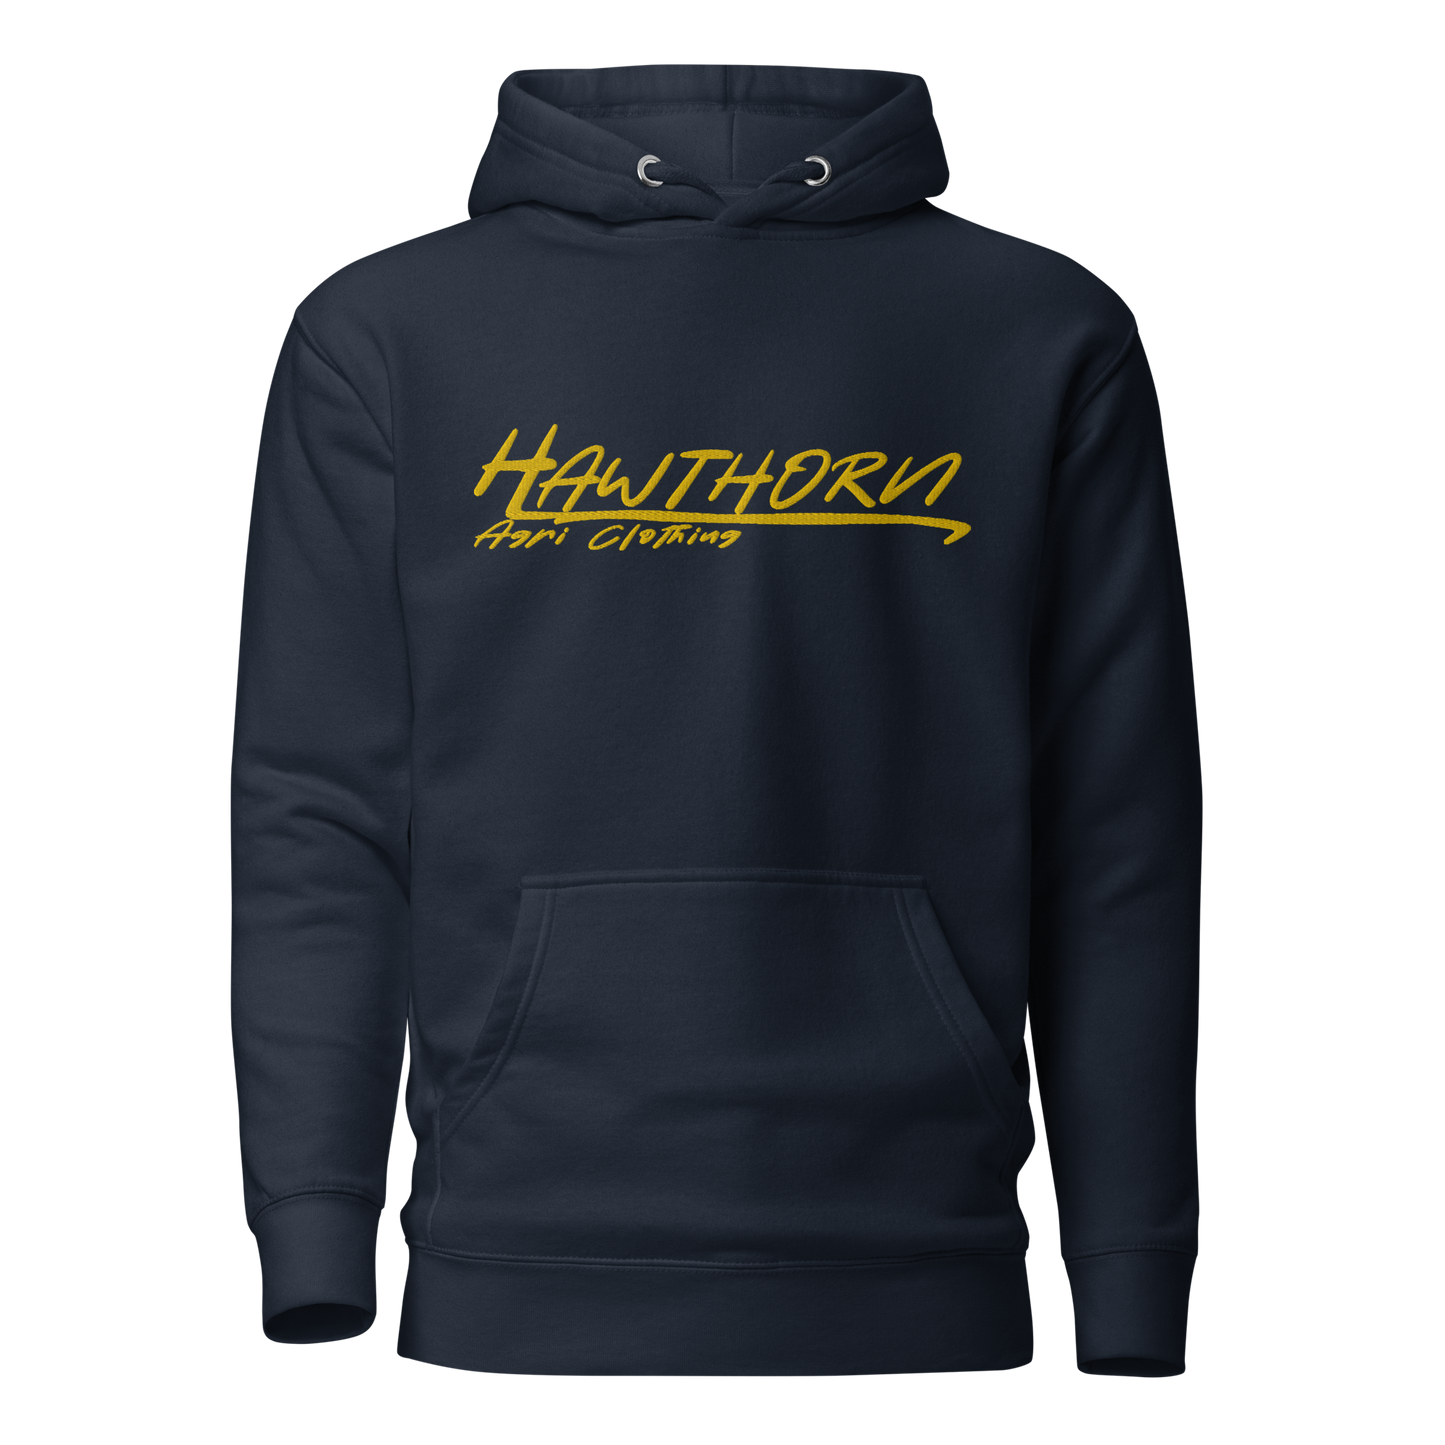 Hawthorn Agri Clothing Hooded Sweatshirt